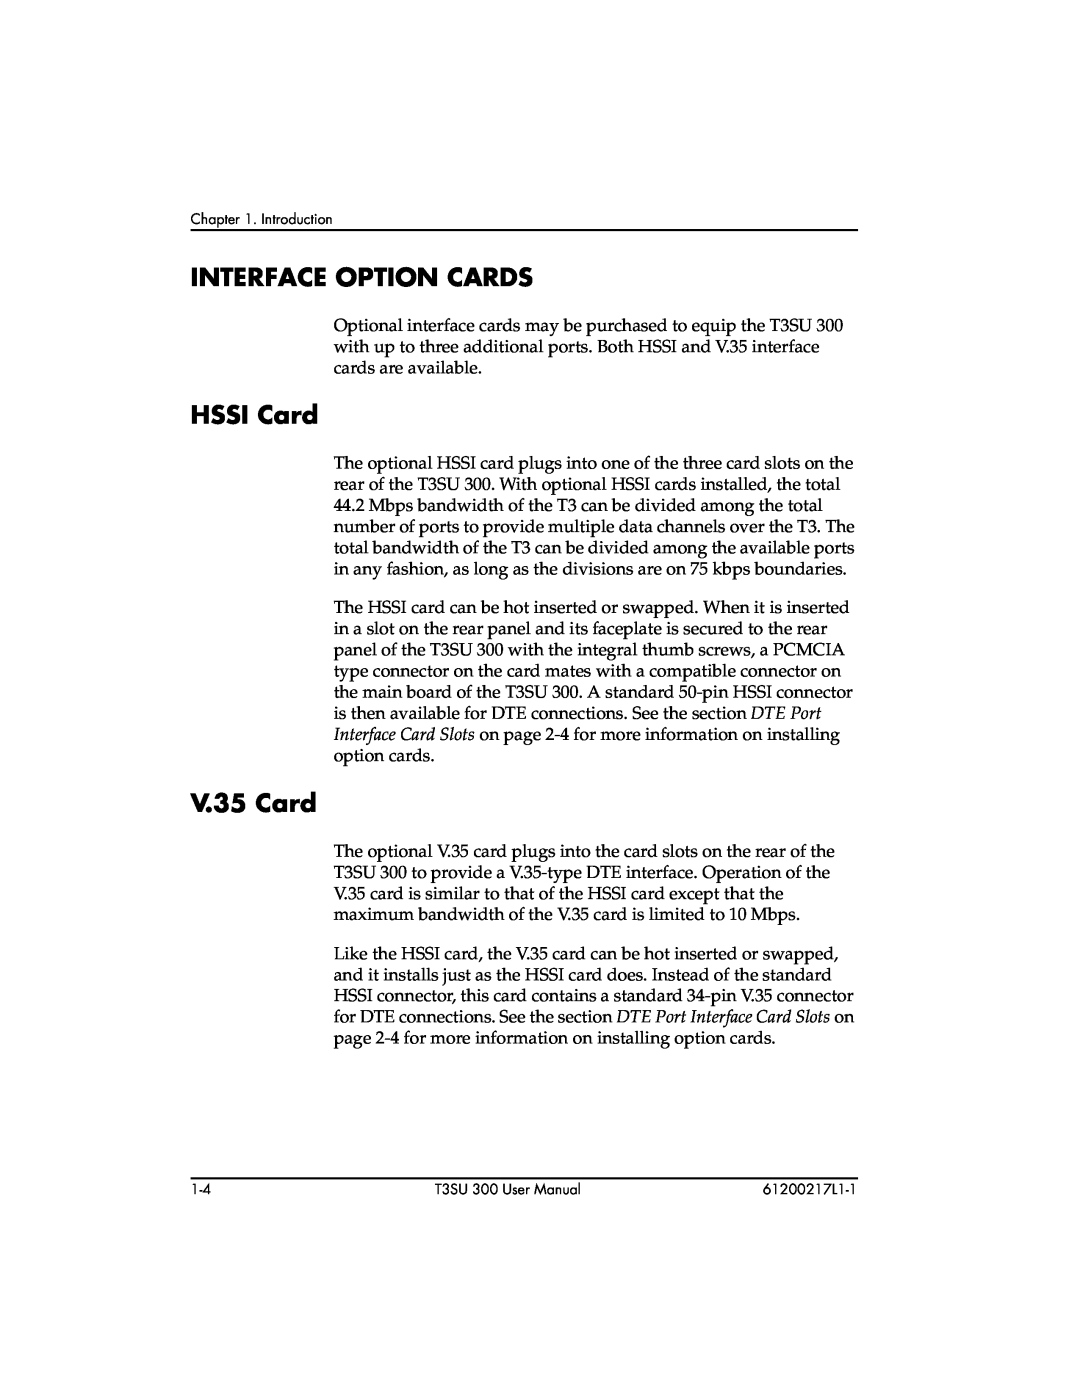 ADTRAN T3SU 300 user manual Interface Option Cards, HSSI Card, V.35 Card 